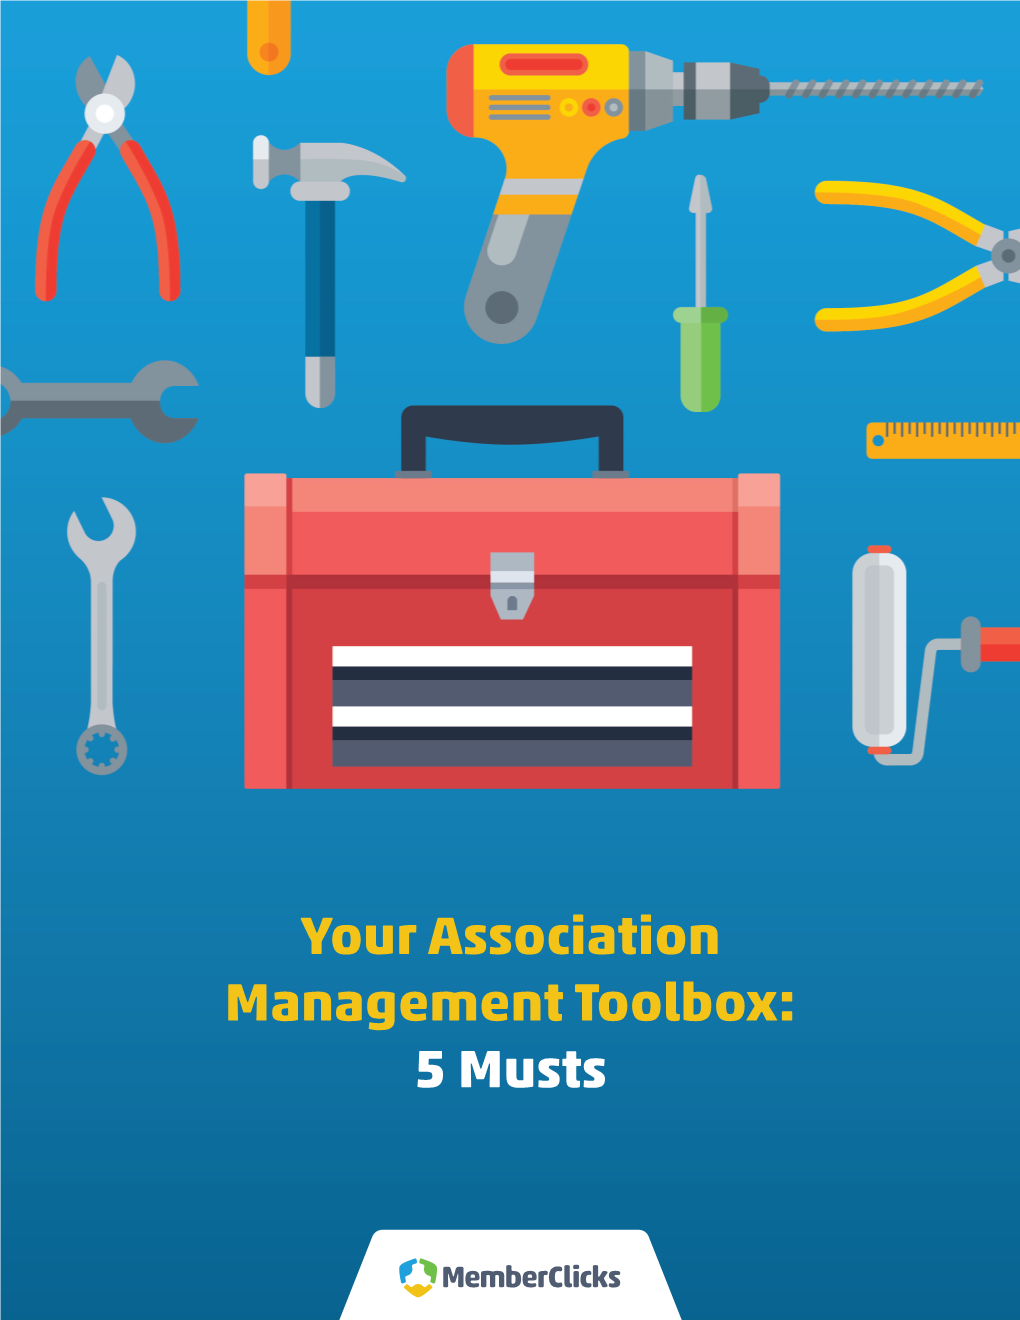 Your Association Management Toolbox